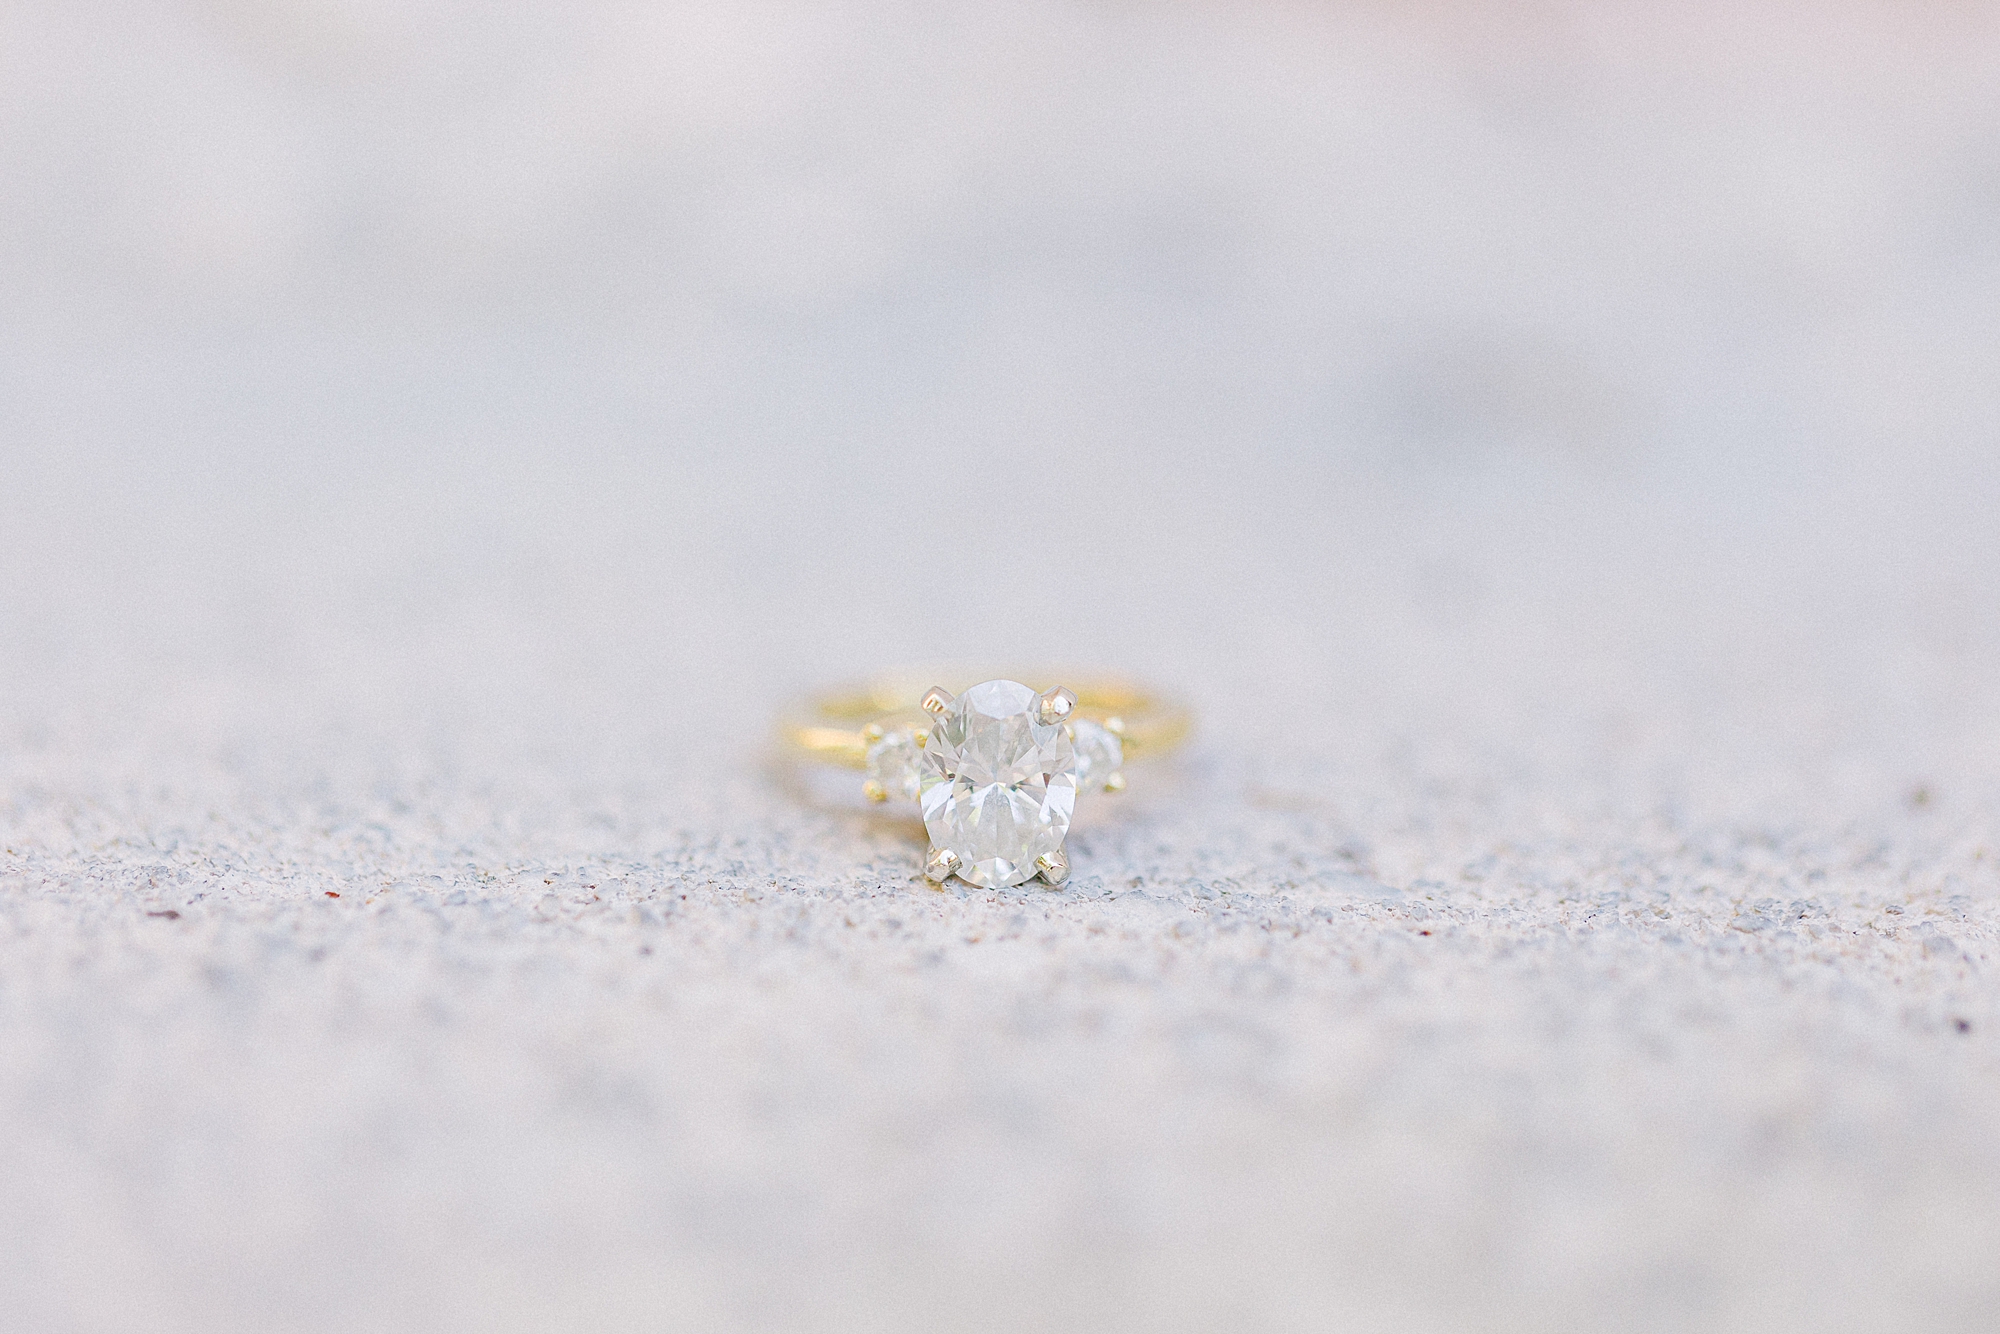 diamond ring with gold band lays on Charleston cobblestone